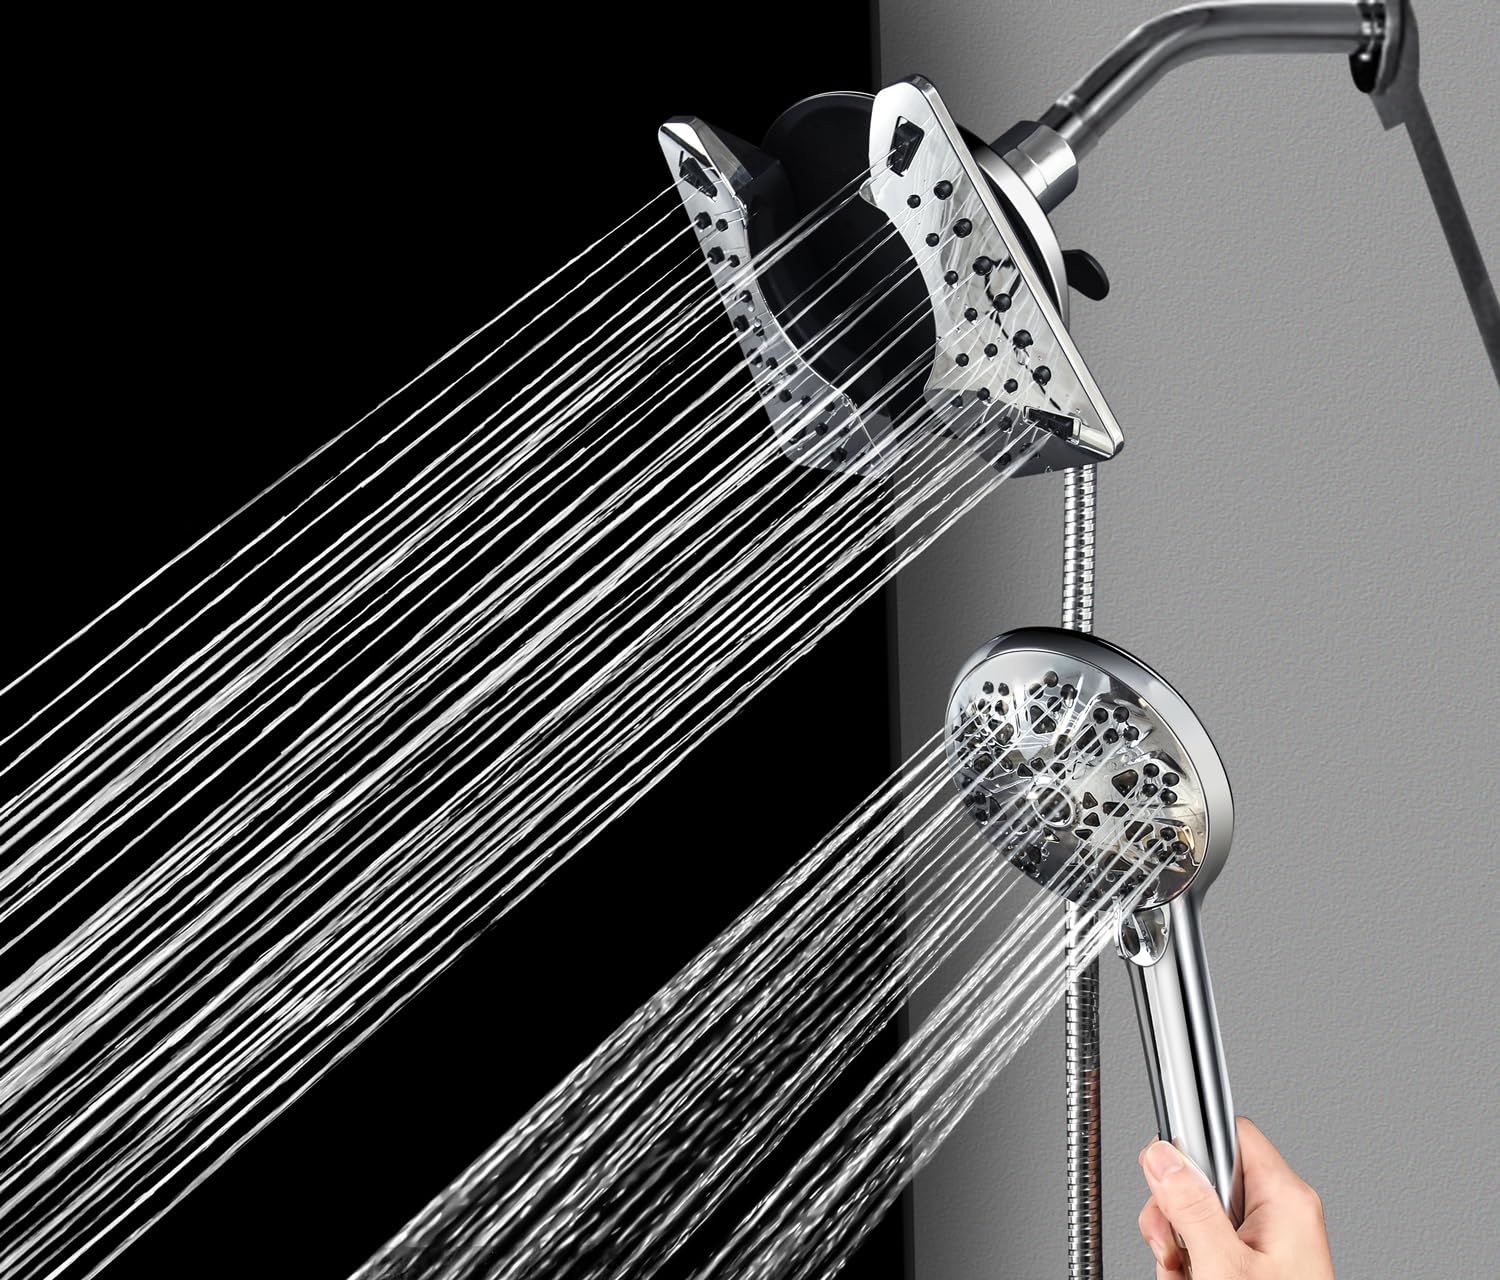 INAVAMZ 2-IN-1 Shower Heads with Handheld Spray Combo: 7.5 Inch Rainfall Shower Head & 10 Settings Hand Held Shower Head, Detachable Shower Head with Hose Lifetime Shower Head Warranty